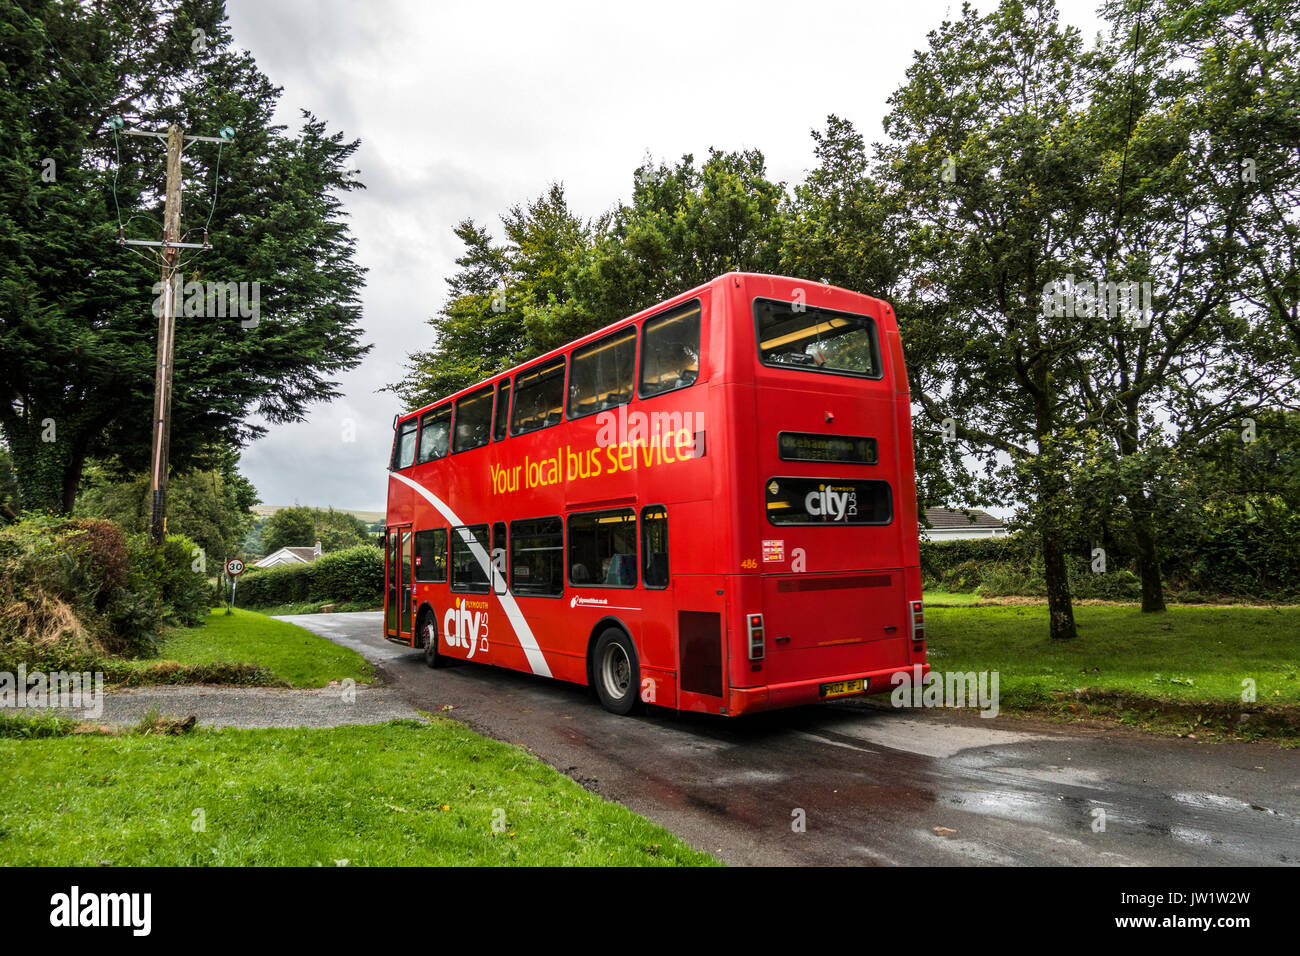 Red no. 46 double decker bus in Lydford, near Okehampton, Devon, England, UK. Stock Photo